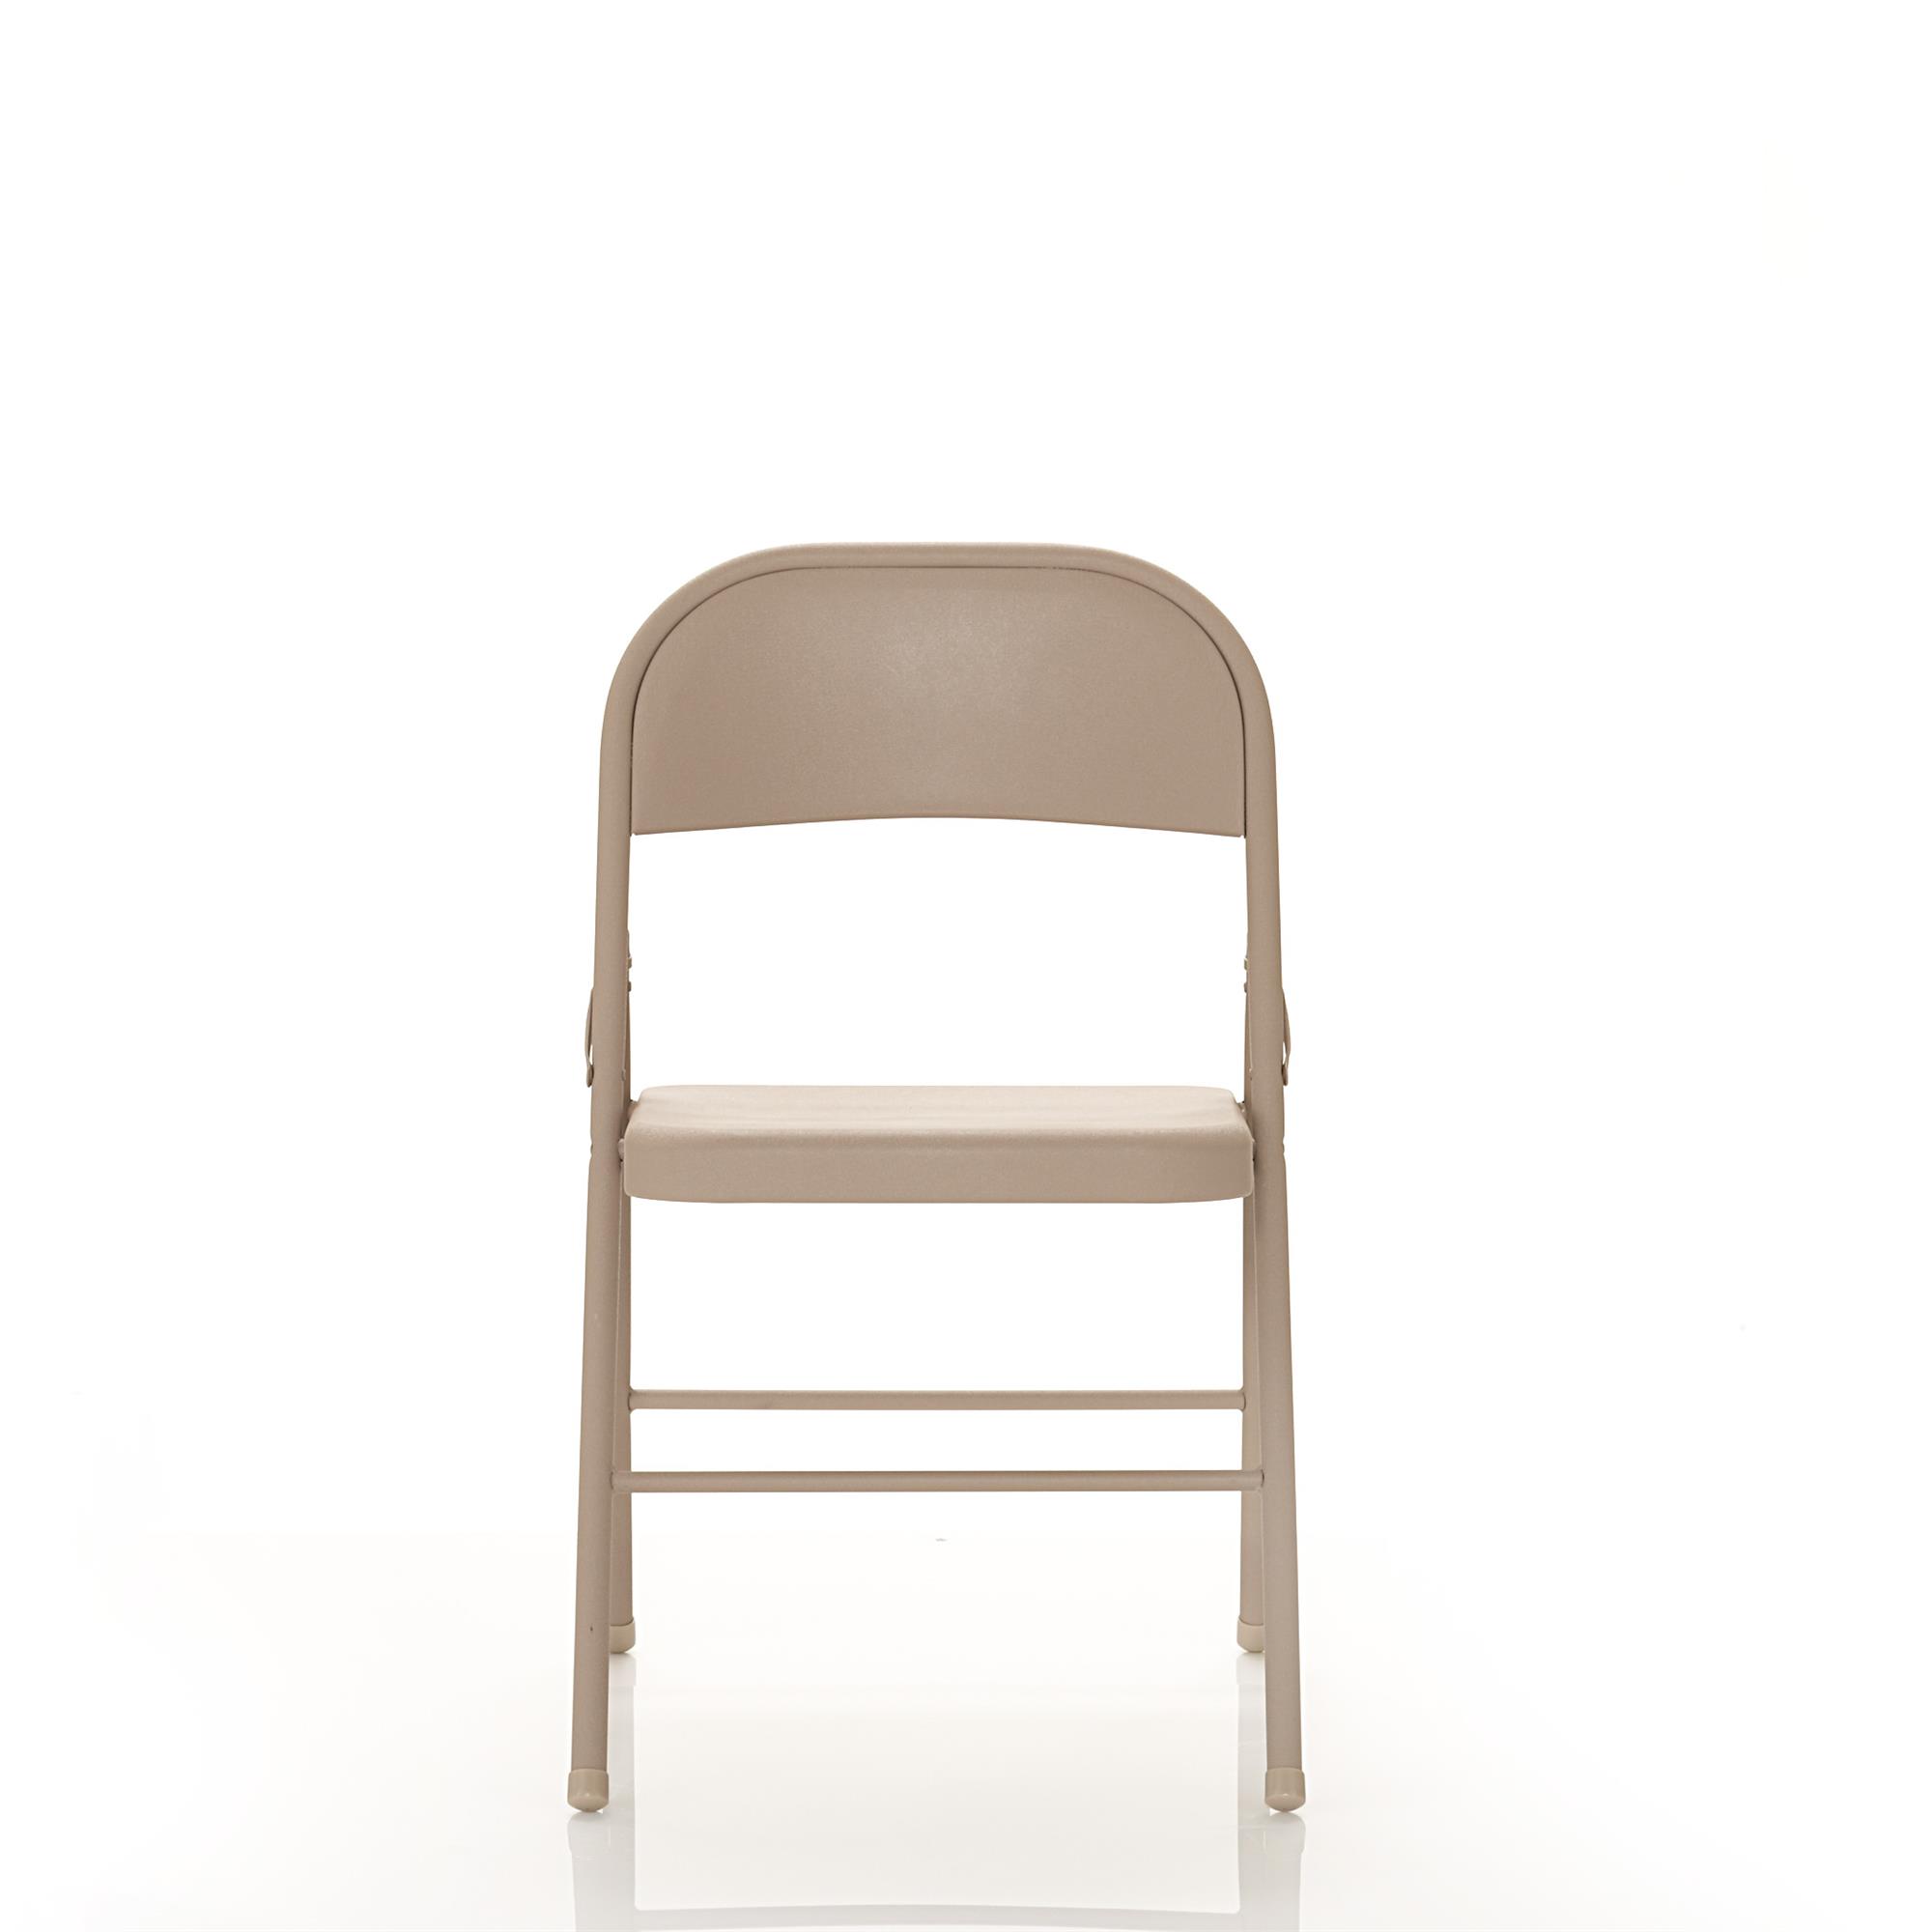 Mainstays Steel Folding Chair (4 Pack), Beige - image 4 of 10